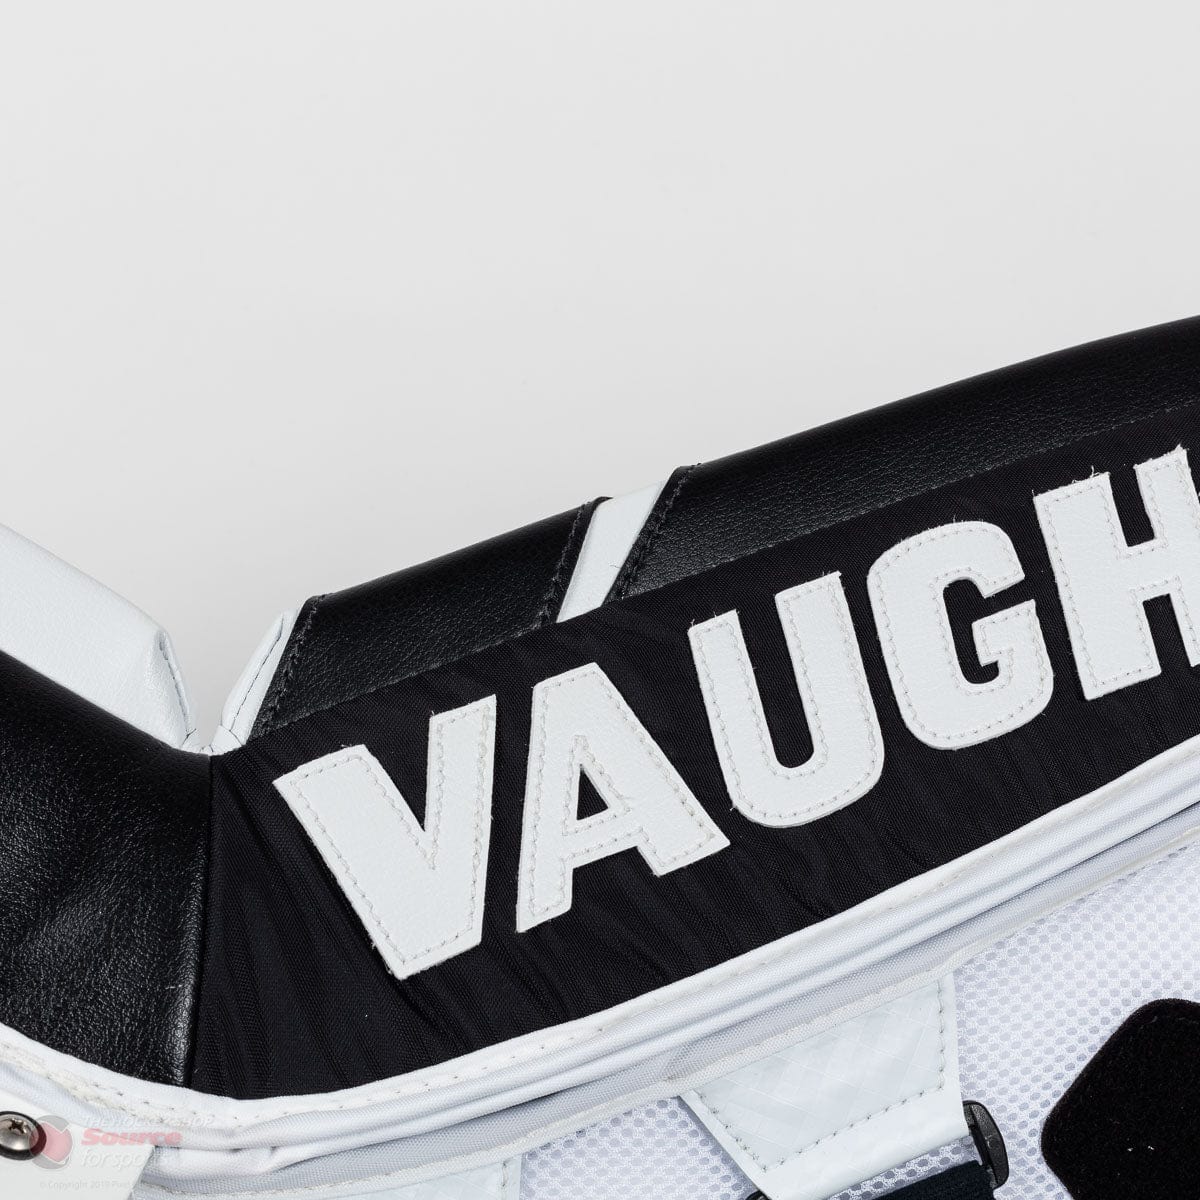 Vaughn Ventus SLR2 Pro Carbon Senior Goalie Leg Pads